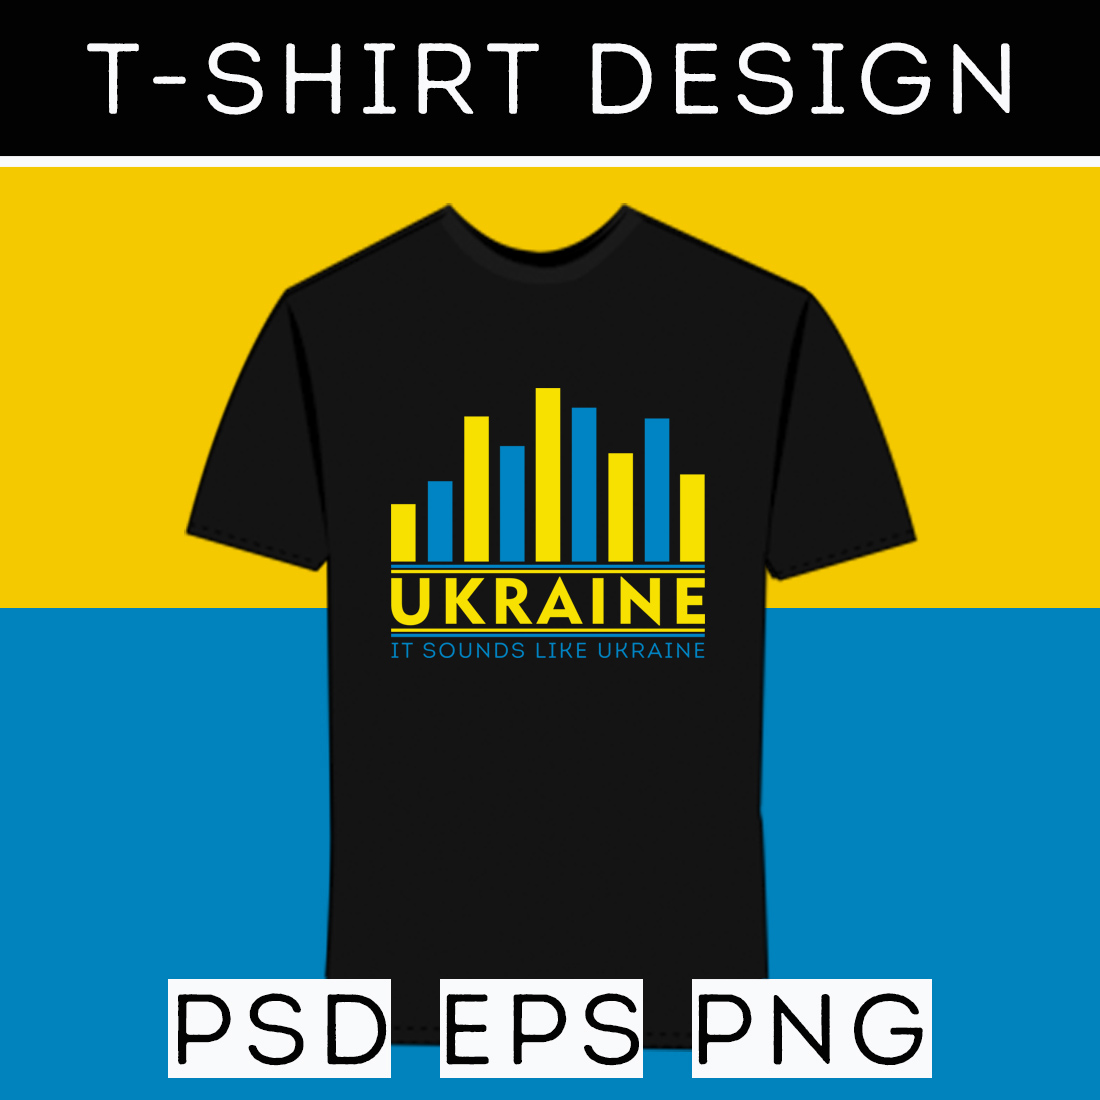 Ukraine T-Shirt Design cover image.